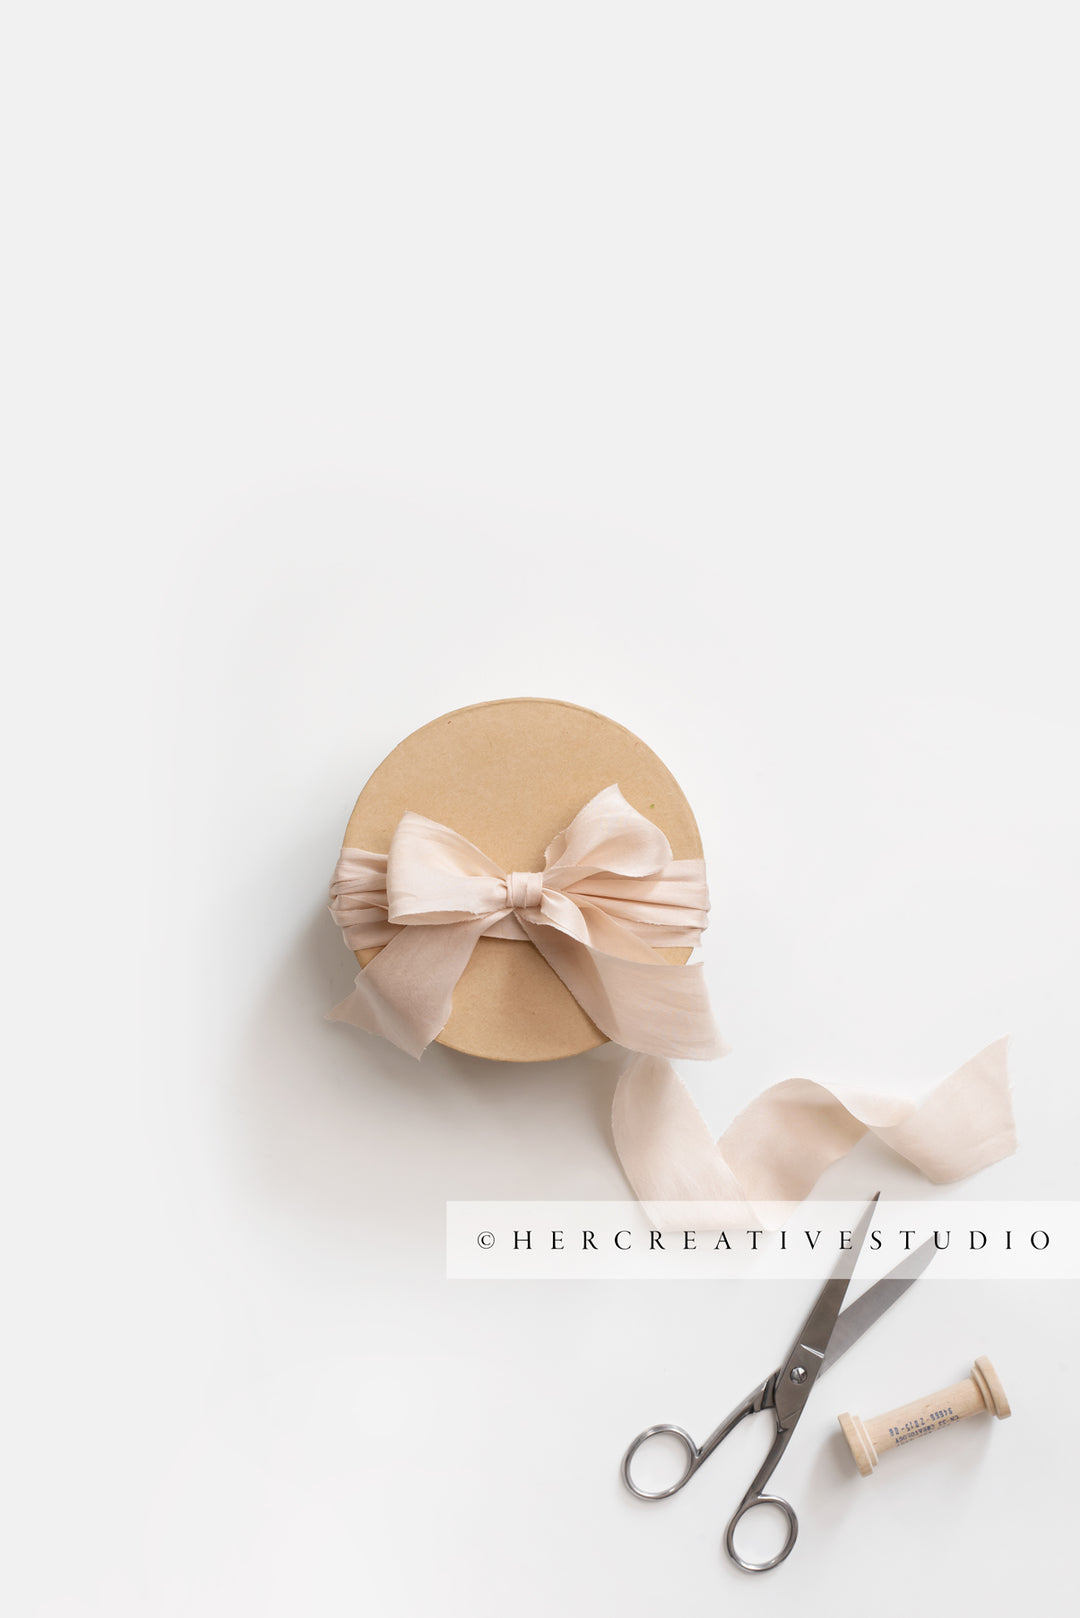 Kraft Paper Gift with Pink Silk Ribbon & Scissors, Stock Image